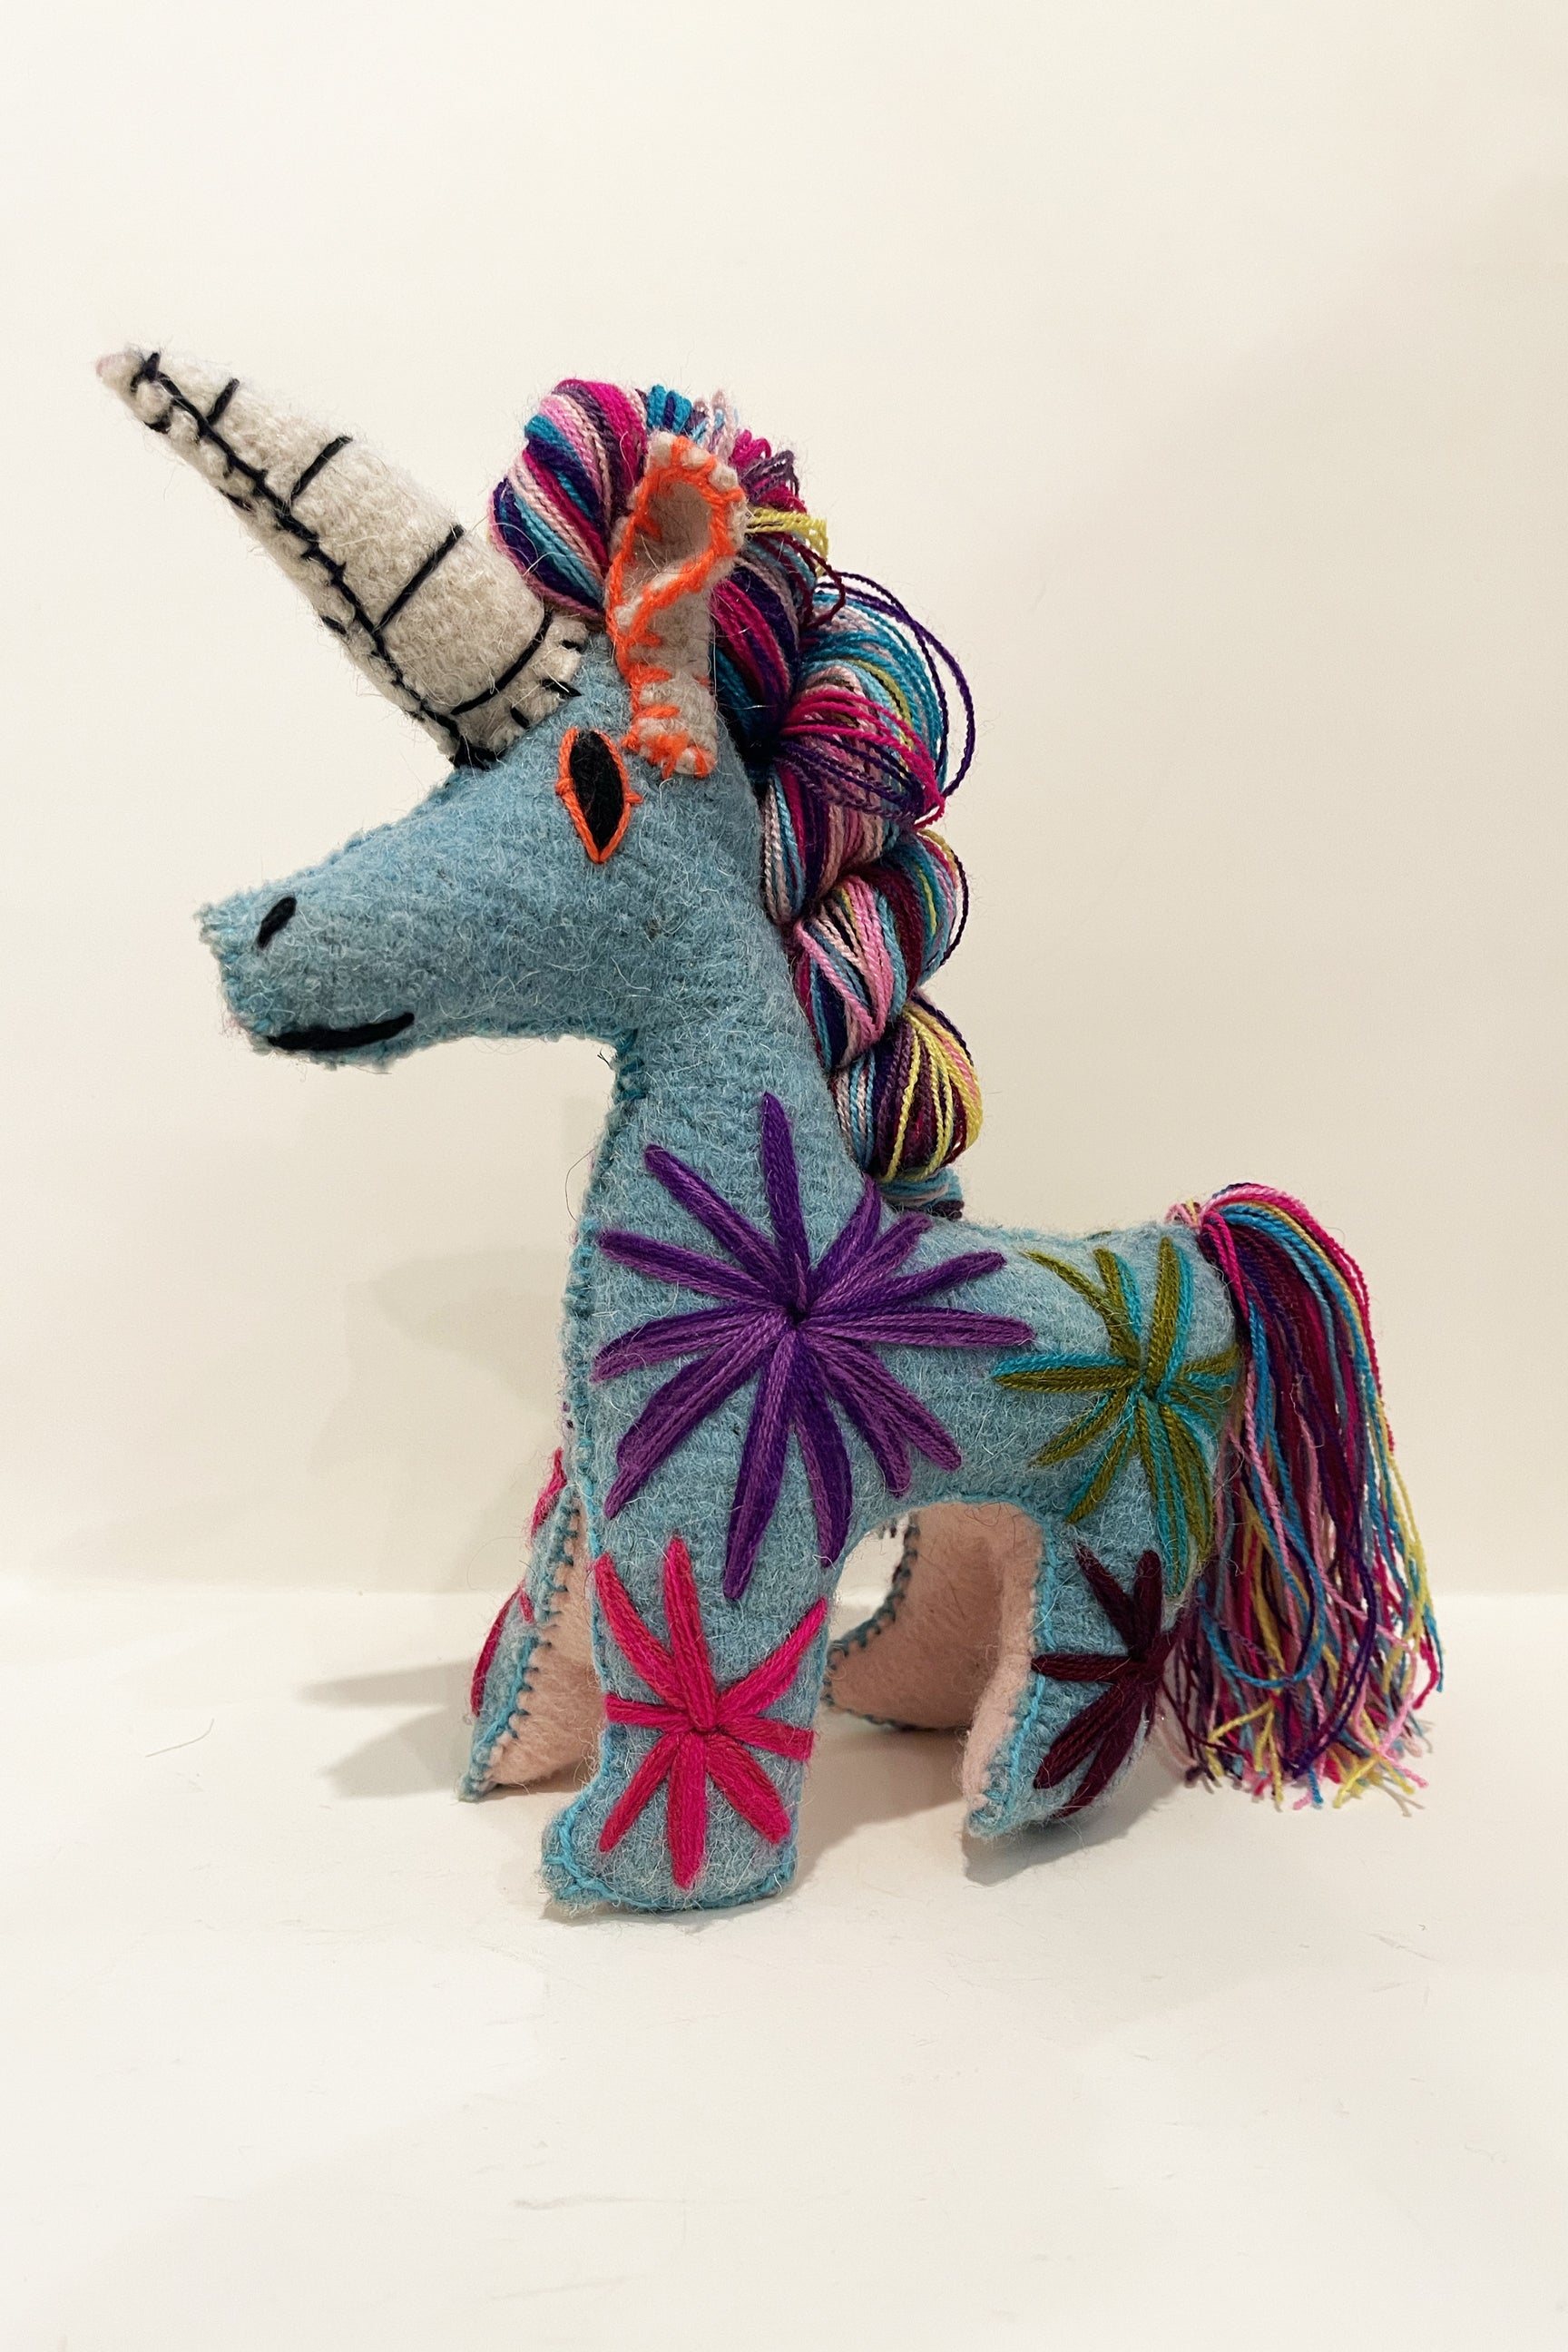 KVZ Designs Guatemalan Stuffed Animals